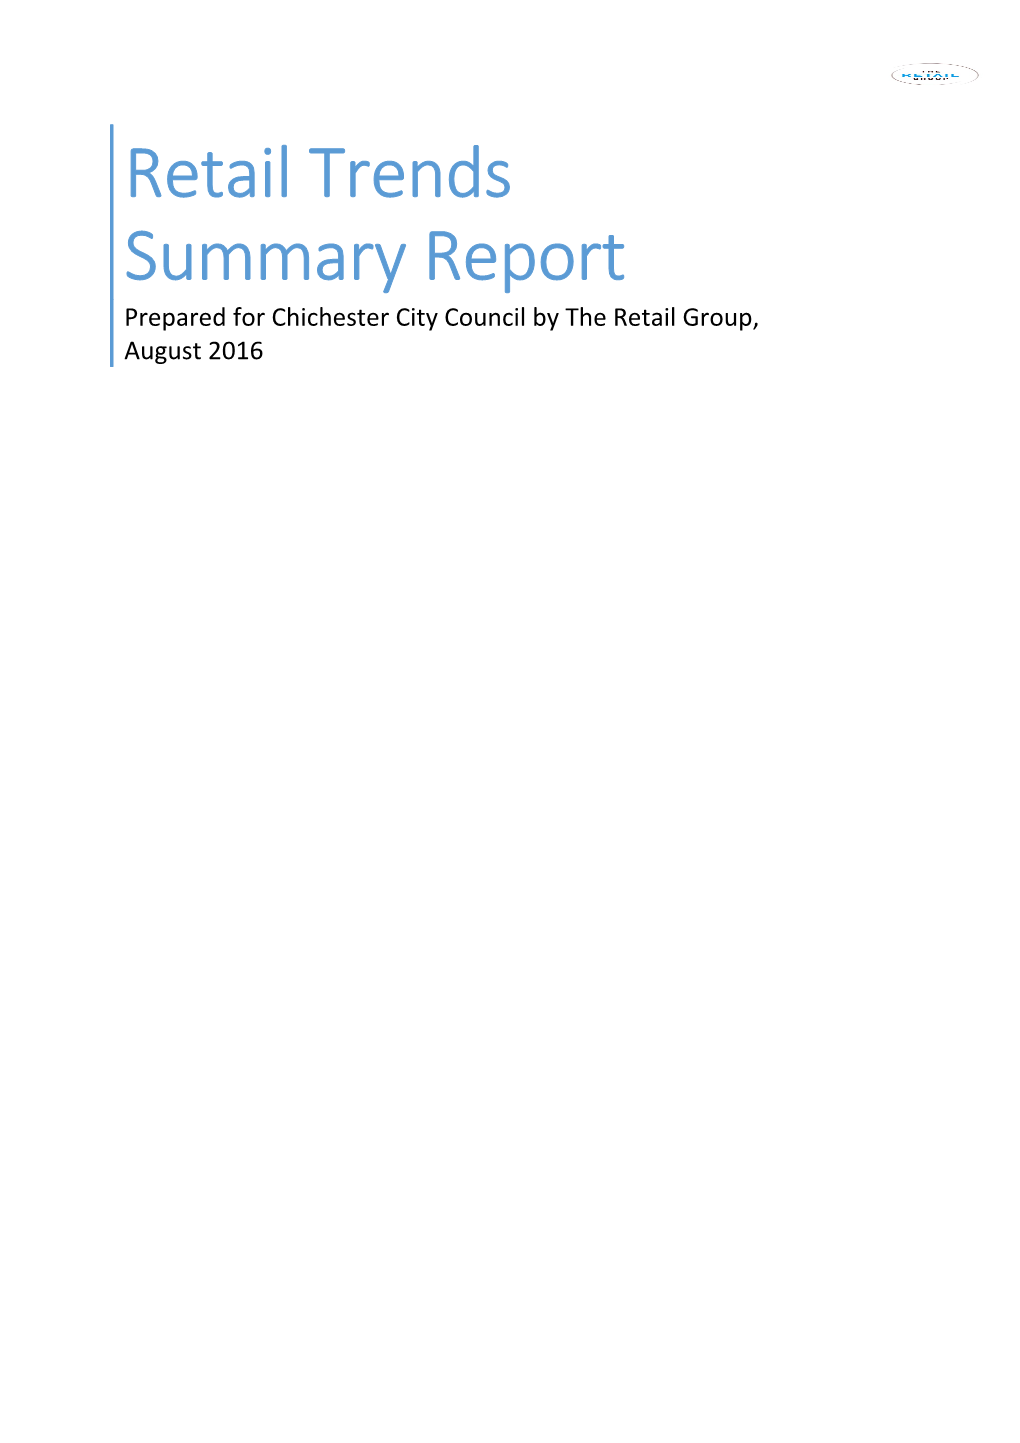 Retail Trends Summary Report